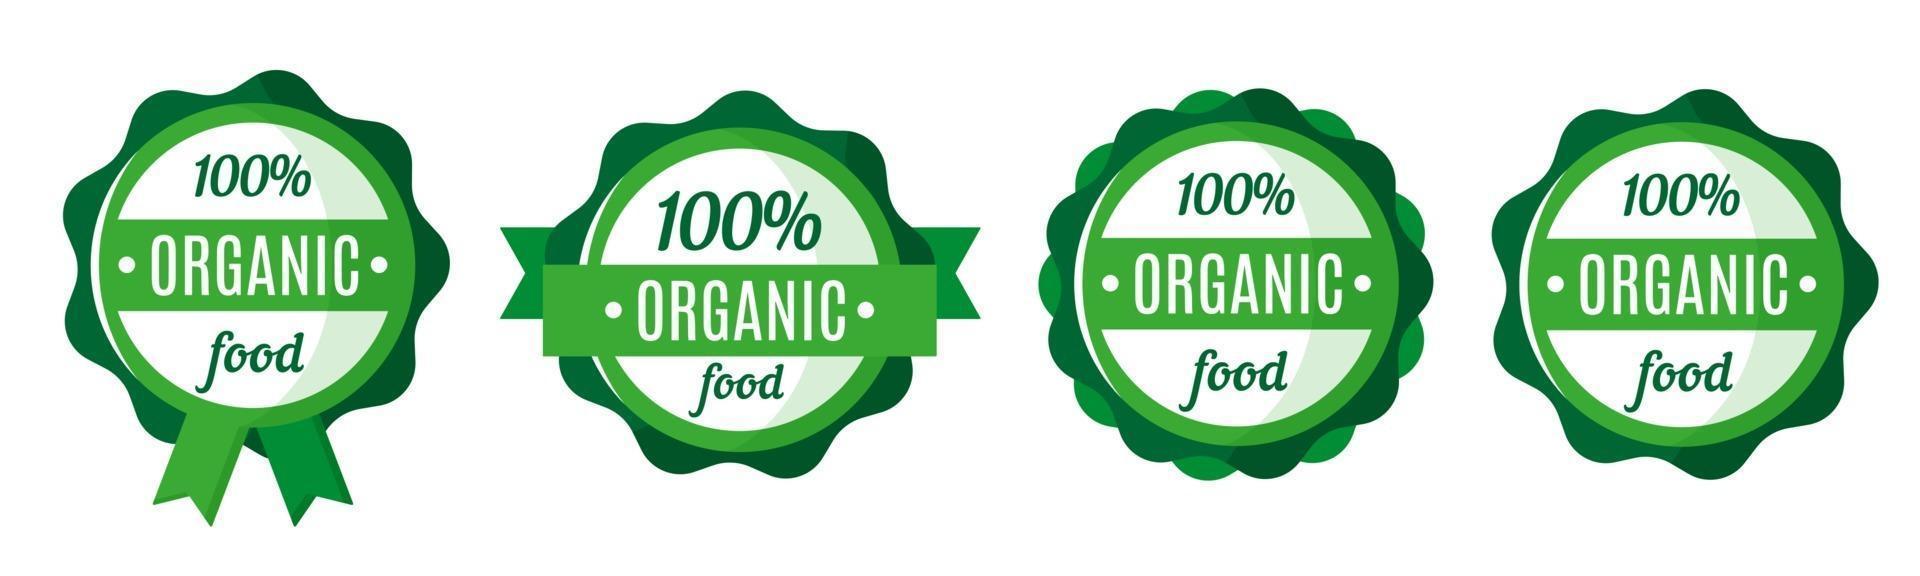 conjunto de vetores de emblemas, etiquetas ou rótulos de alimentos orgânicos e frescos verdes redondos. design de etiquetas de mercado ecológico. compras de alimentos ecológicos.